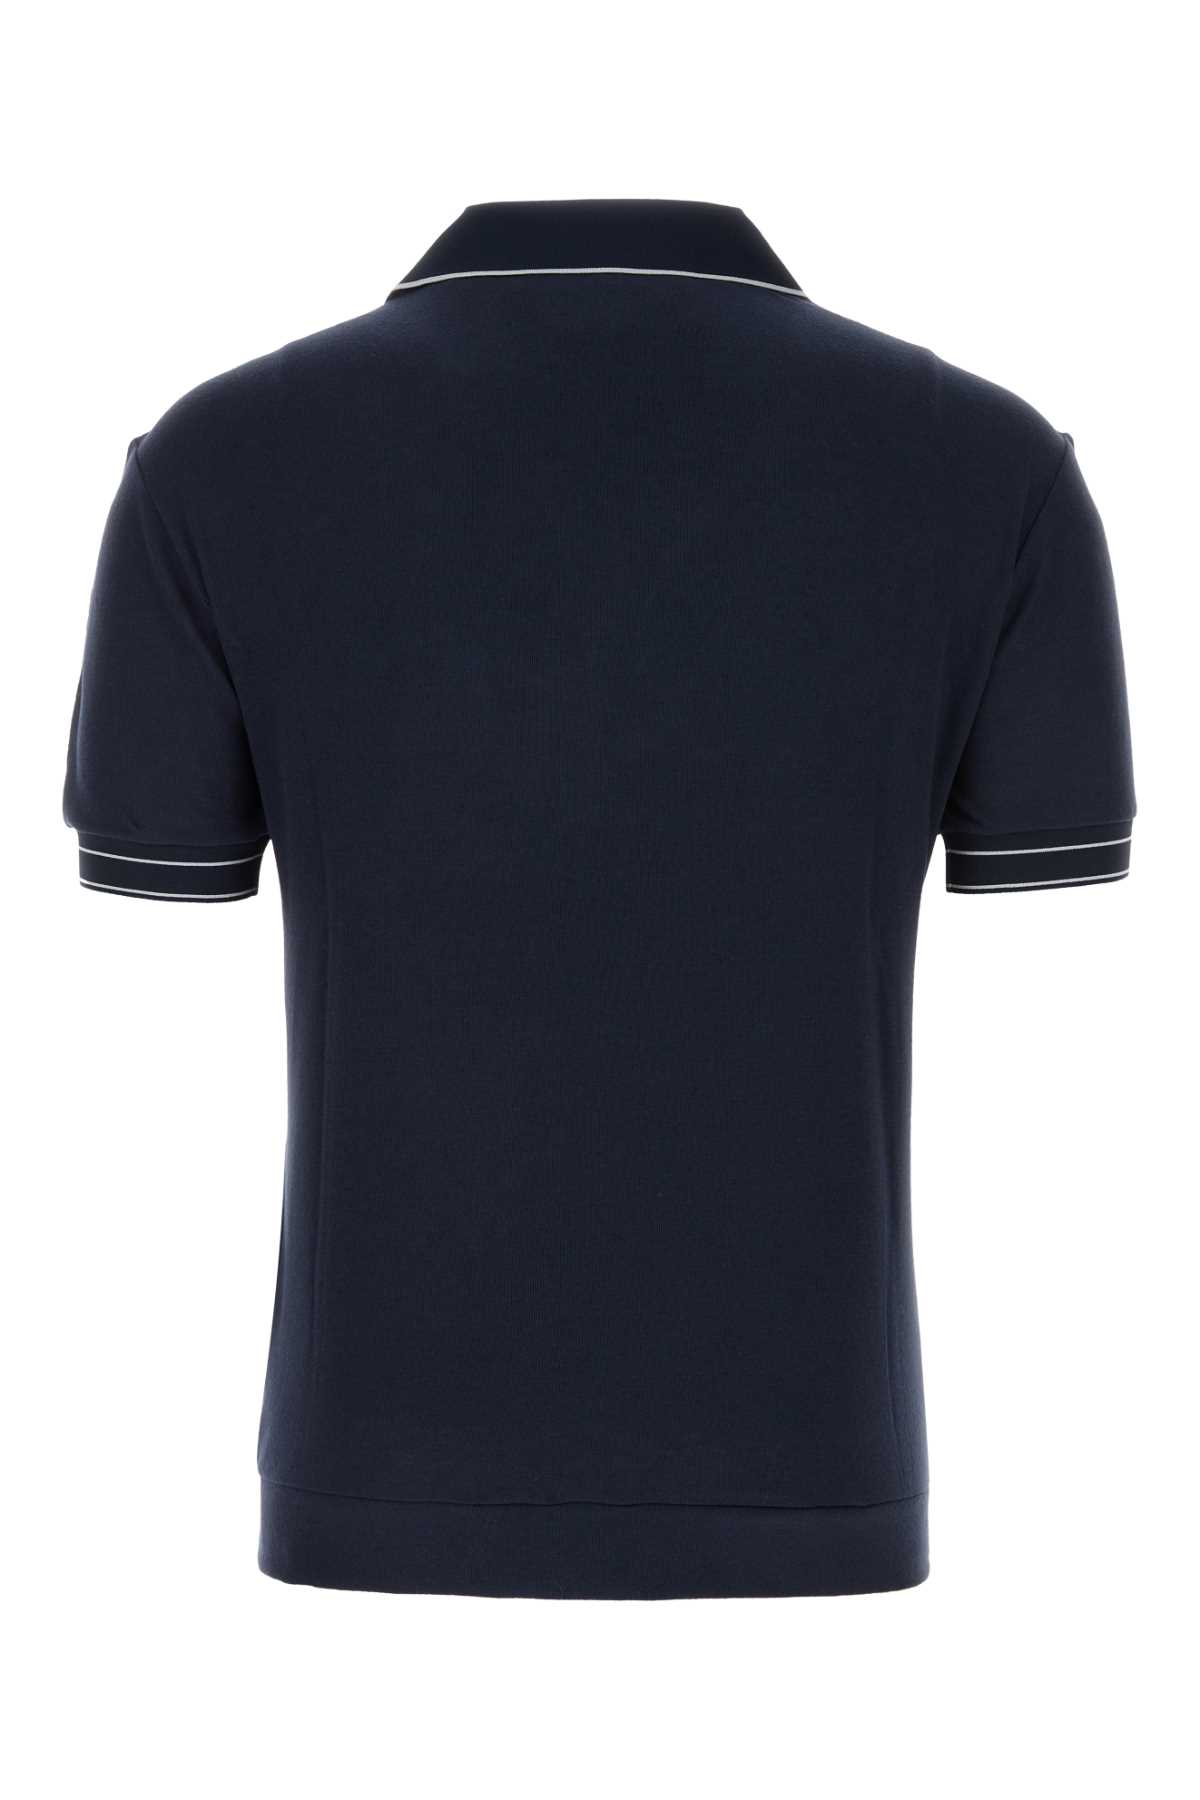 Giorgio Armani Midnight Bue Viscose Blend Polo Shirt In Navy